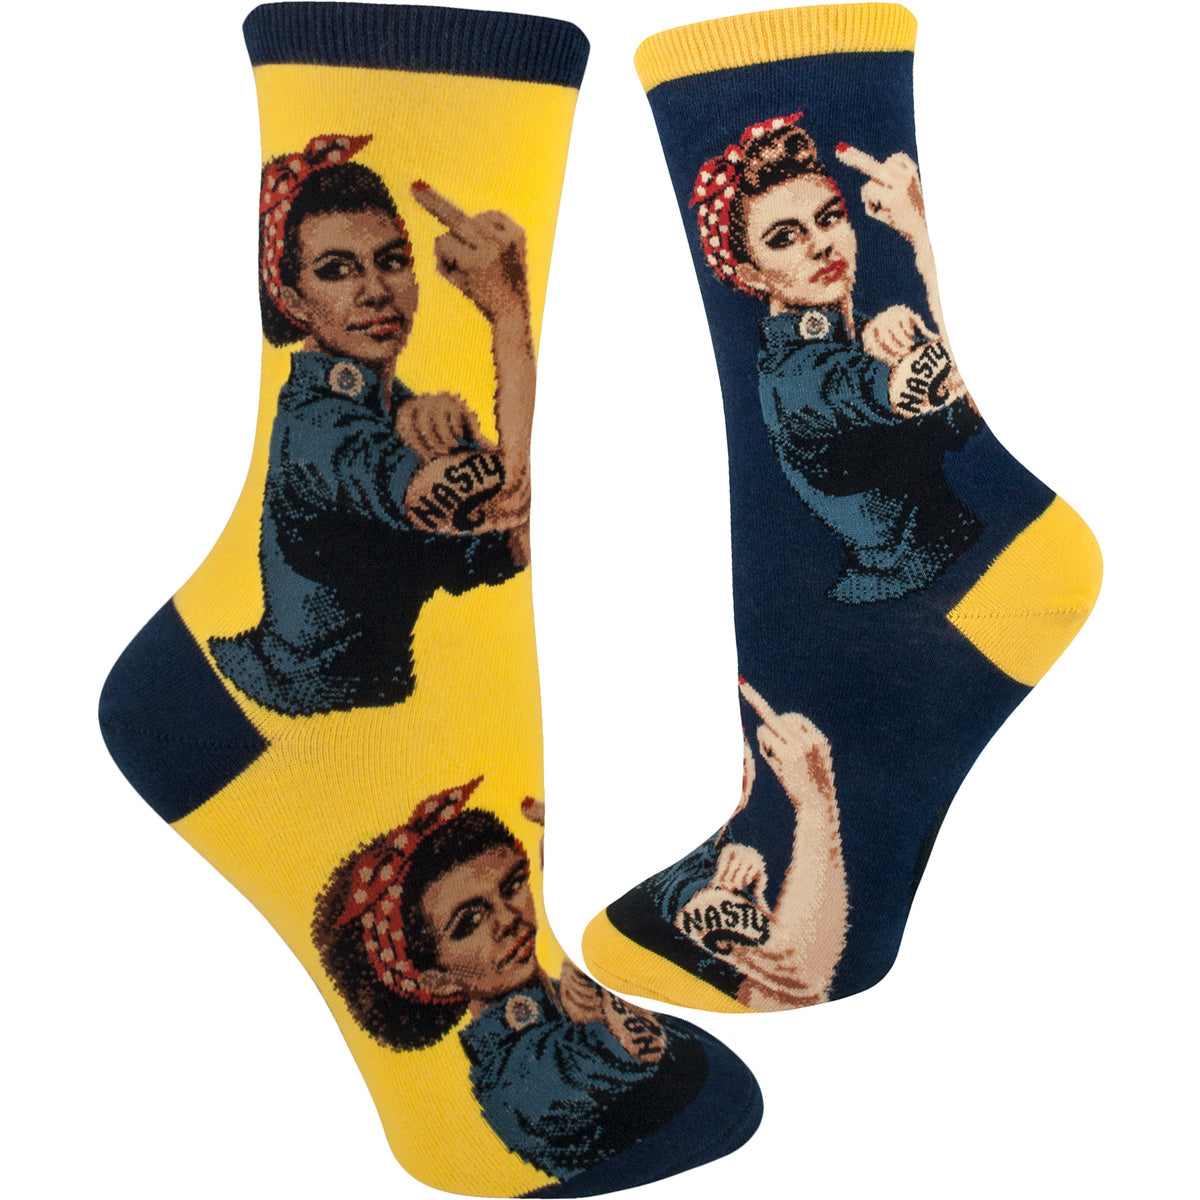 Nasty Rosie the Riveter gives the middle finger to oppressors on these socks for feminists & nasty women.